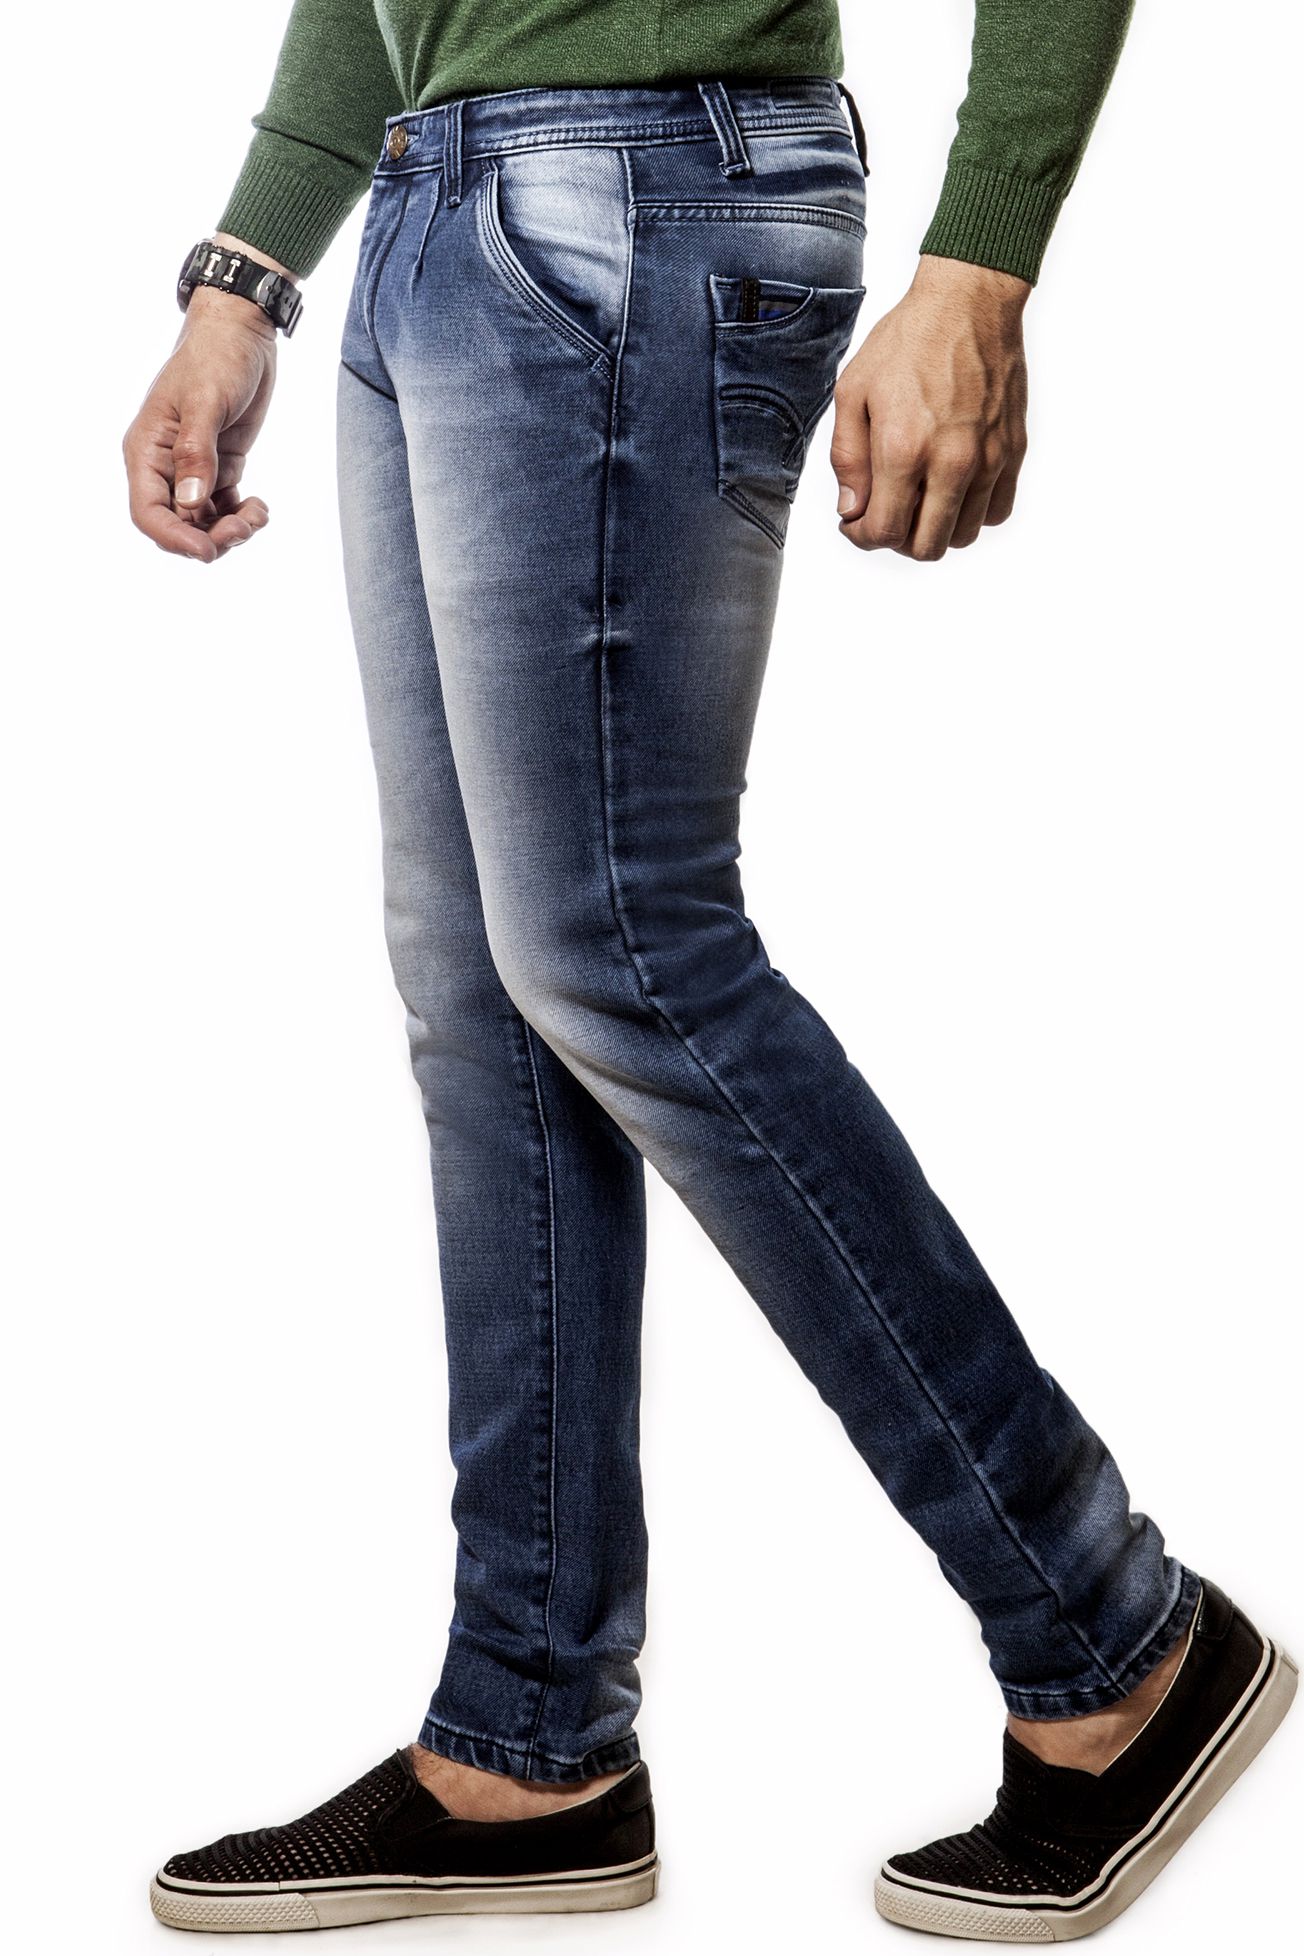 max jeans price